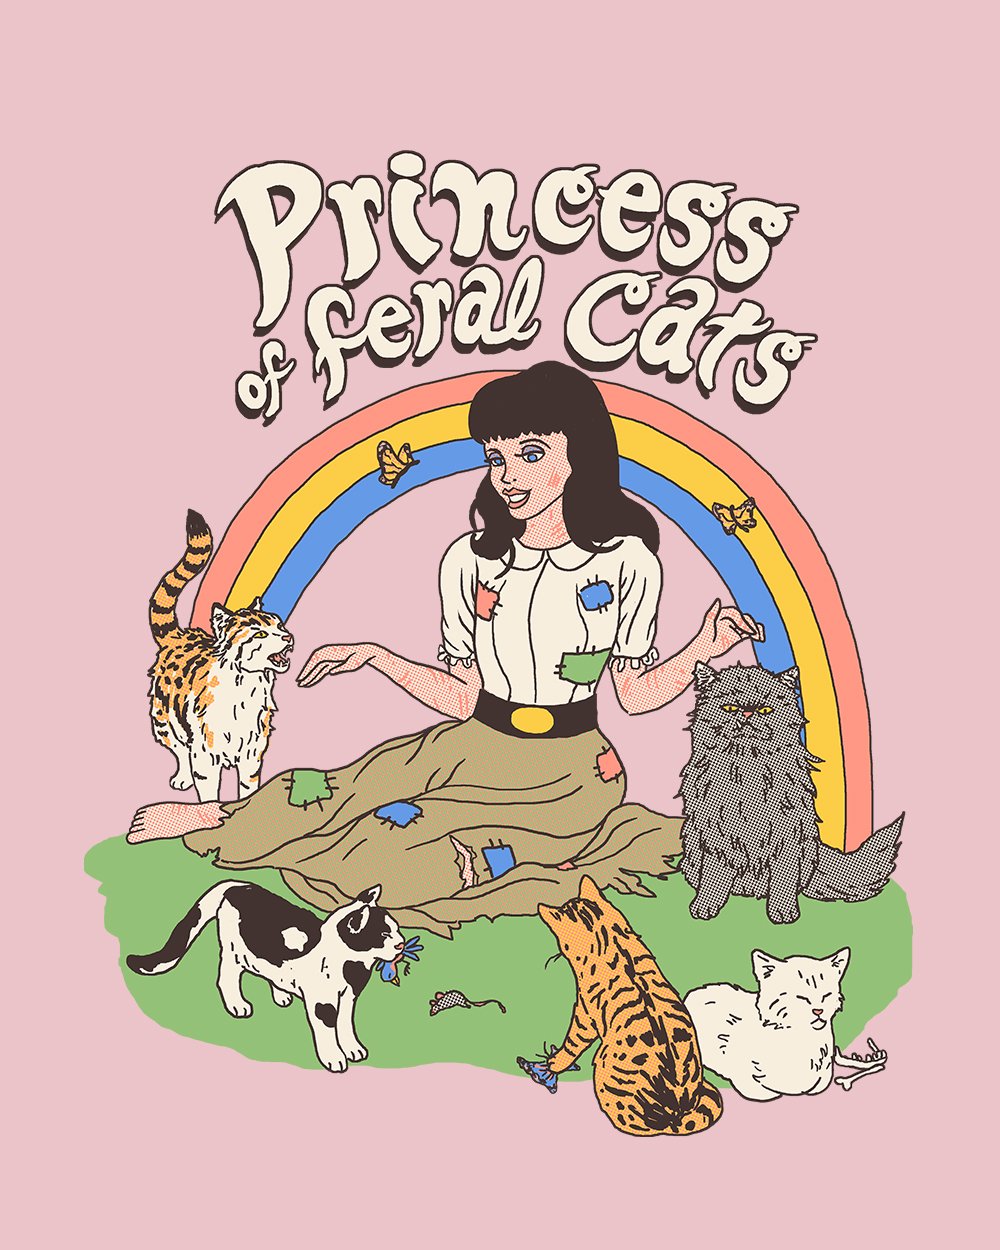 Princess of Feral Cats T-Shirt Australia Online #colour_pink